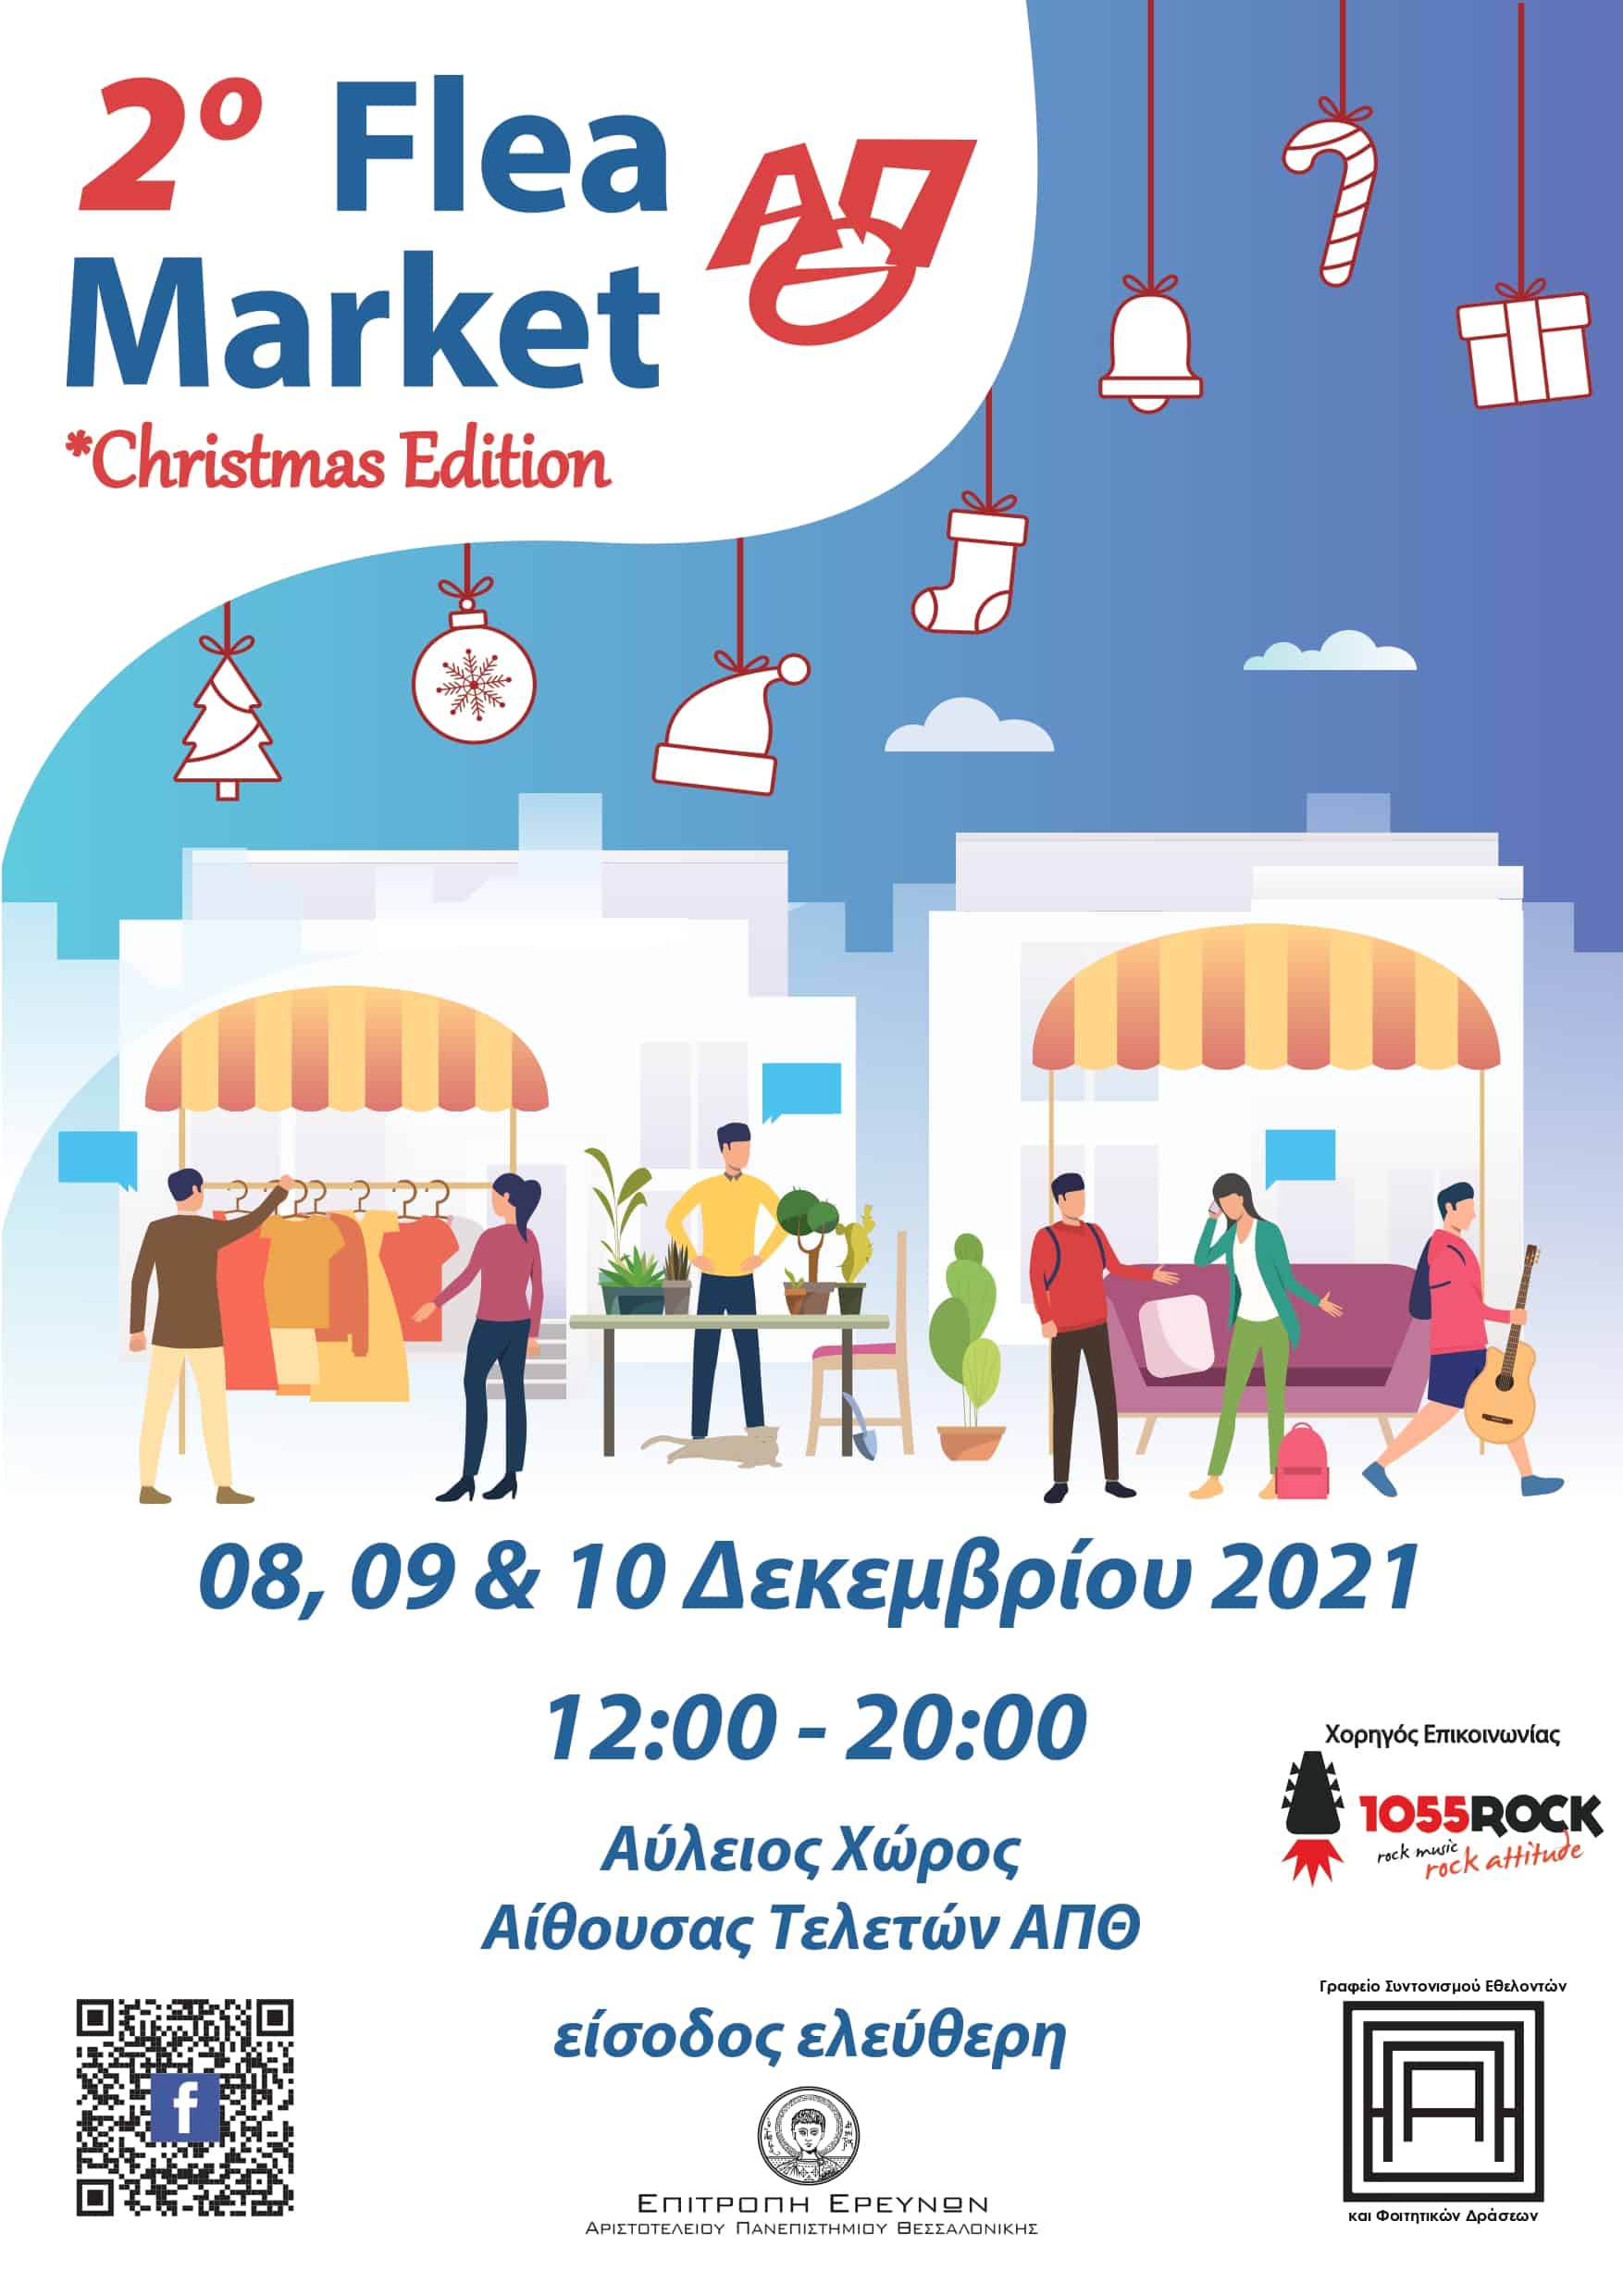 Flea market 2021 Poster